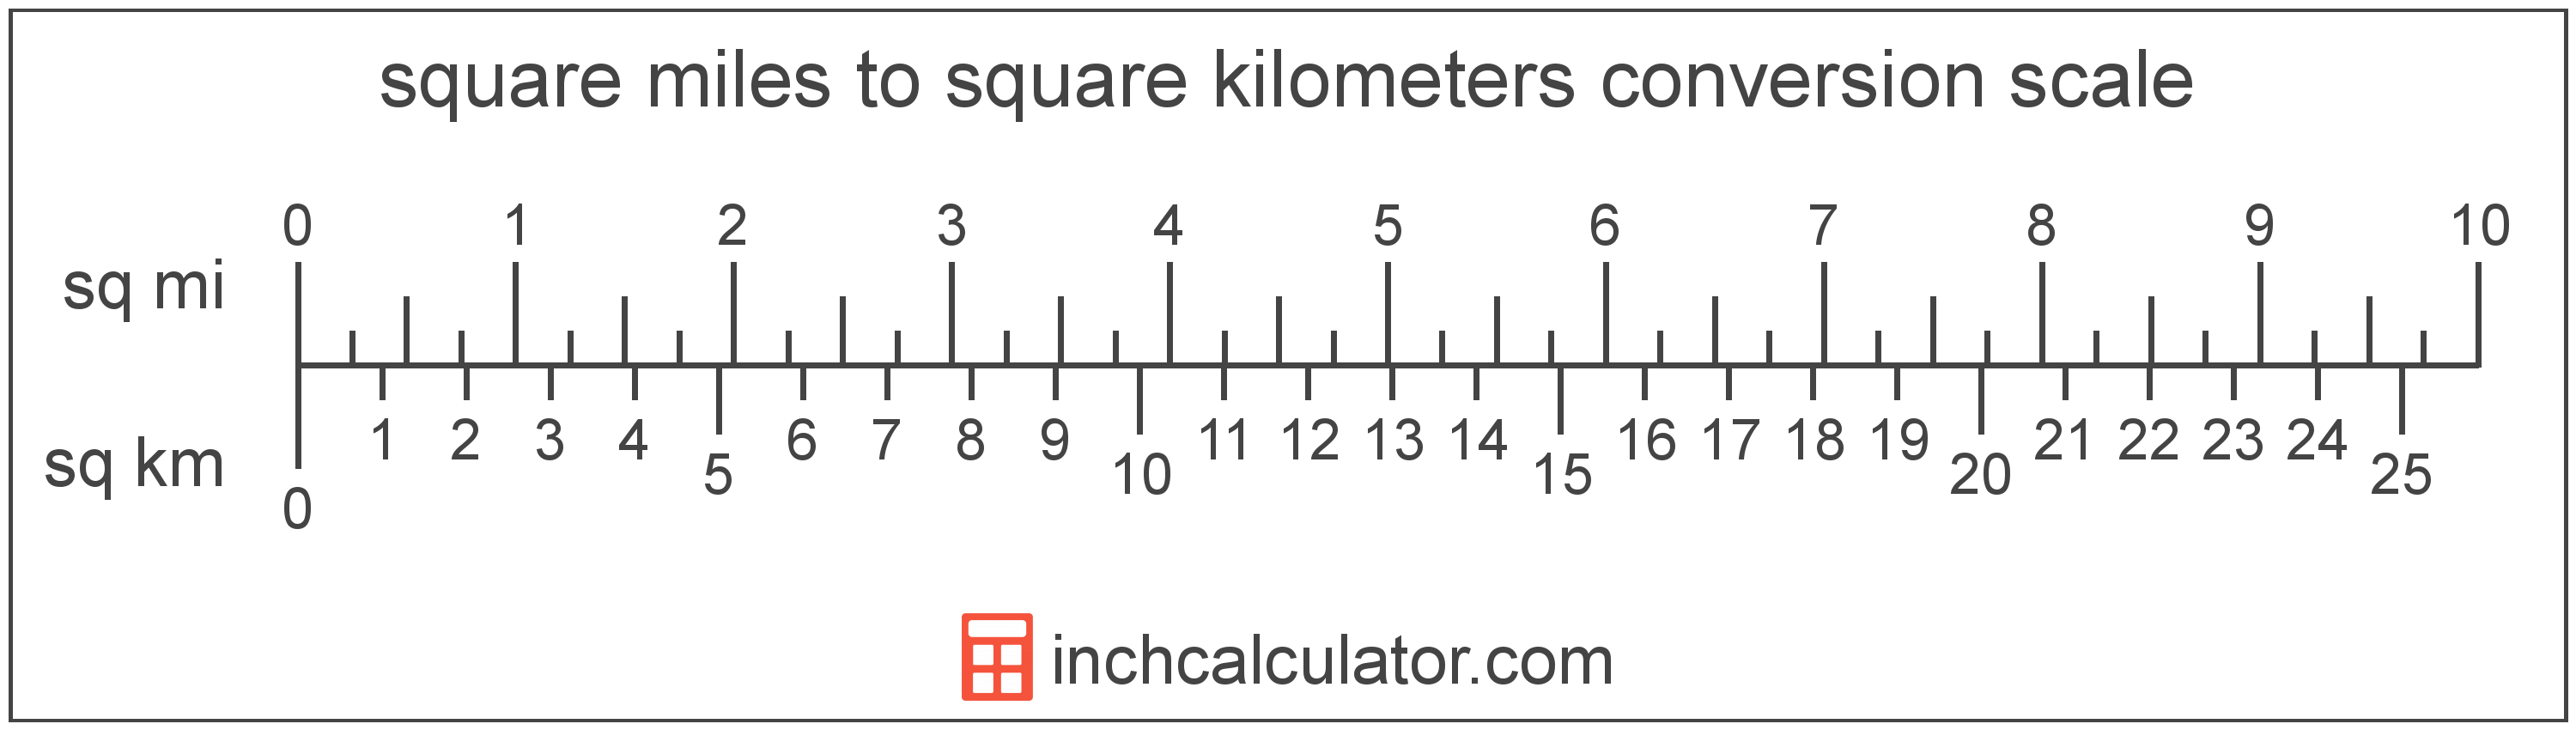 conversion scale showing square kilometers and equivalent square miles area values